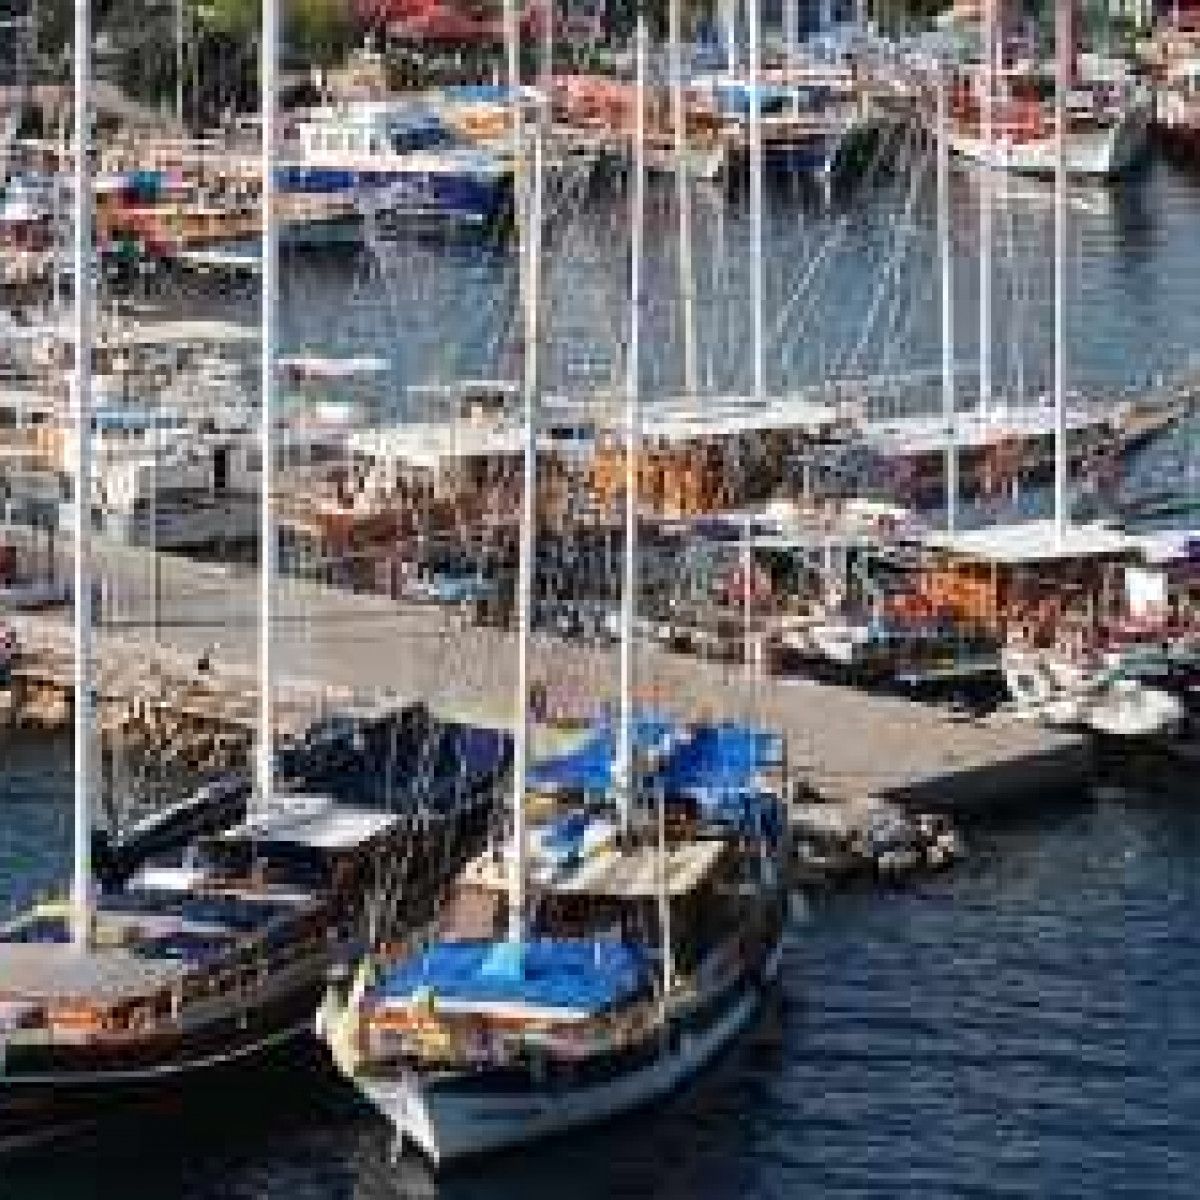 Visit Turkey - 9 Things to do in Marmaris Icmeler, Loved it!